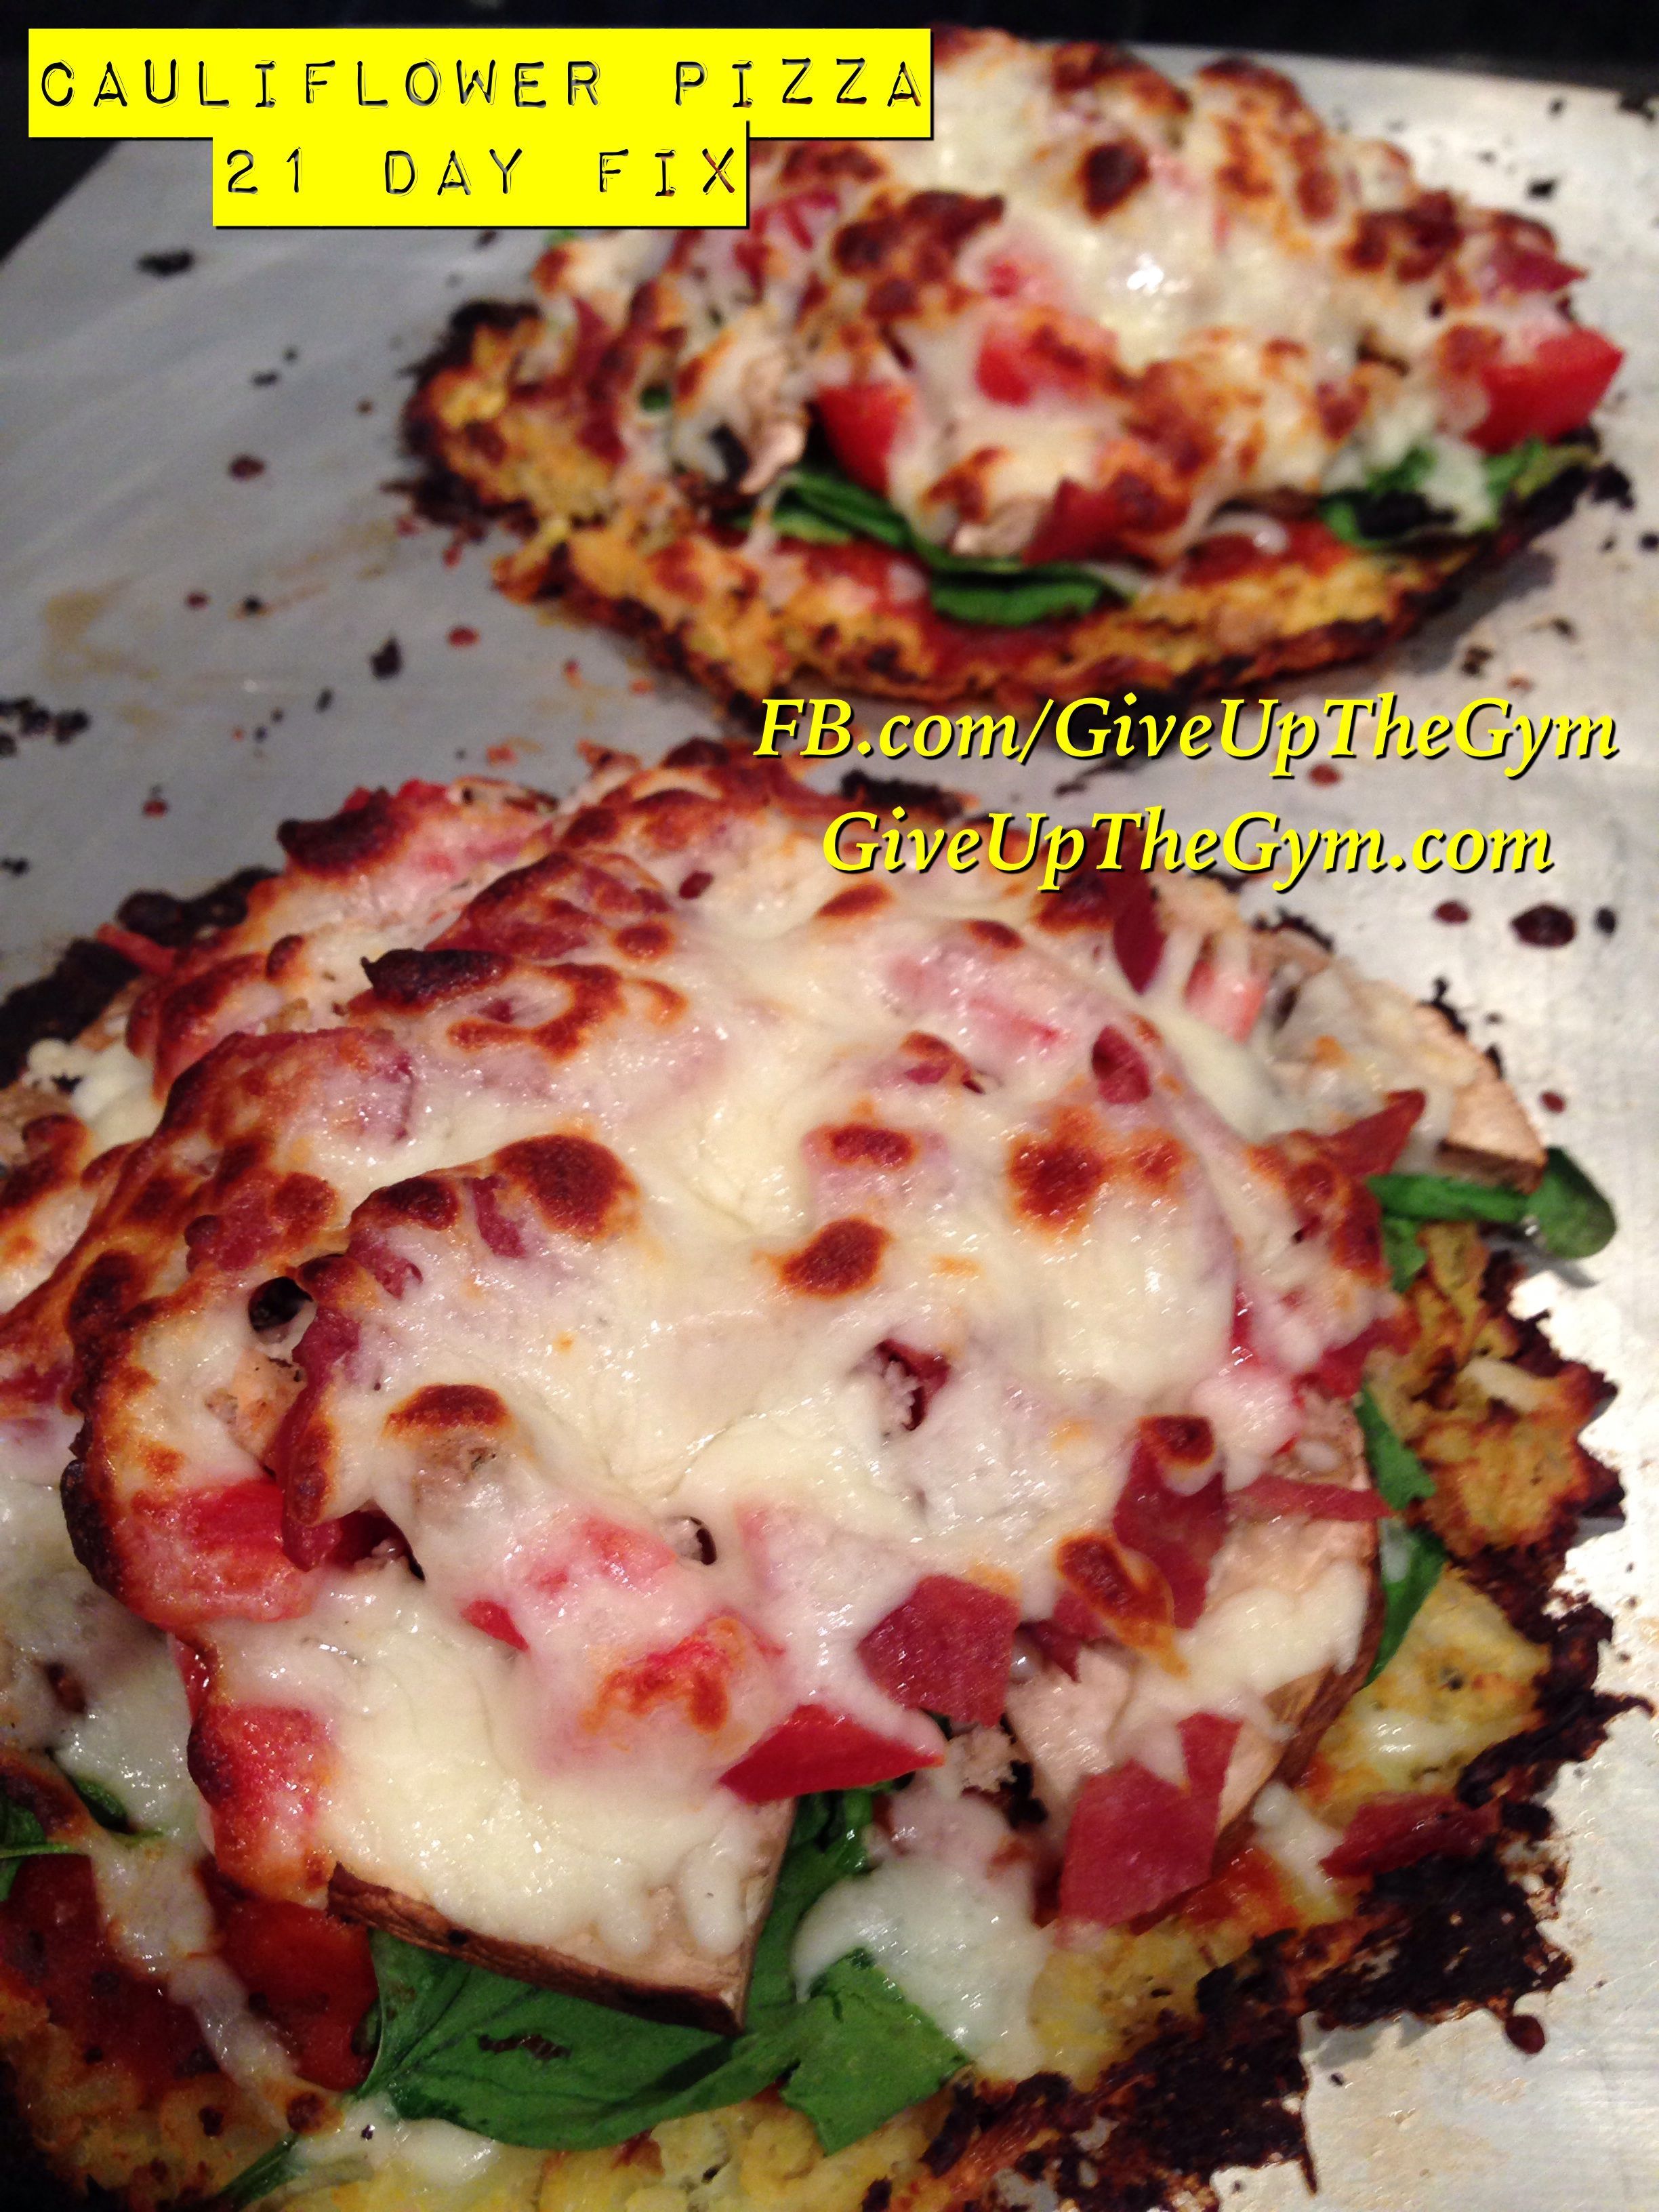 21 Day Fix Recipes – Cauliflower Pizza. Get started now! teambeachbody.com…